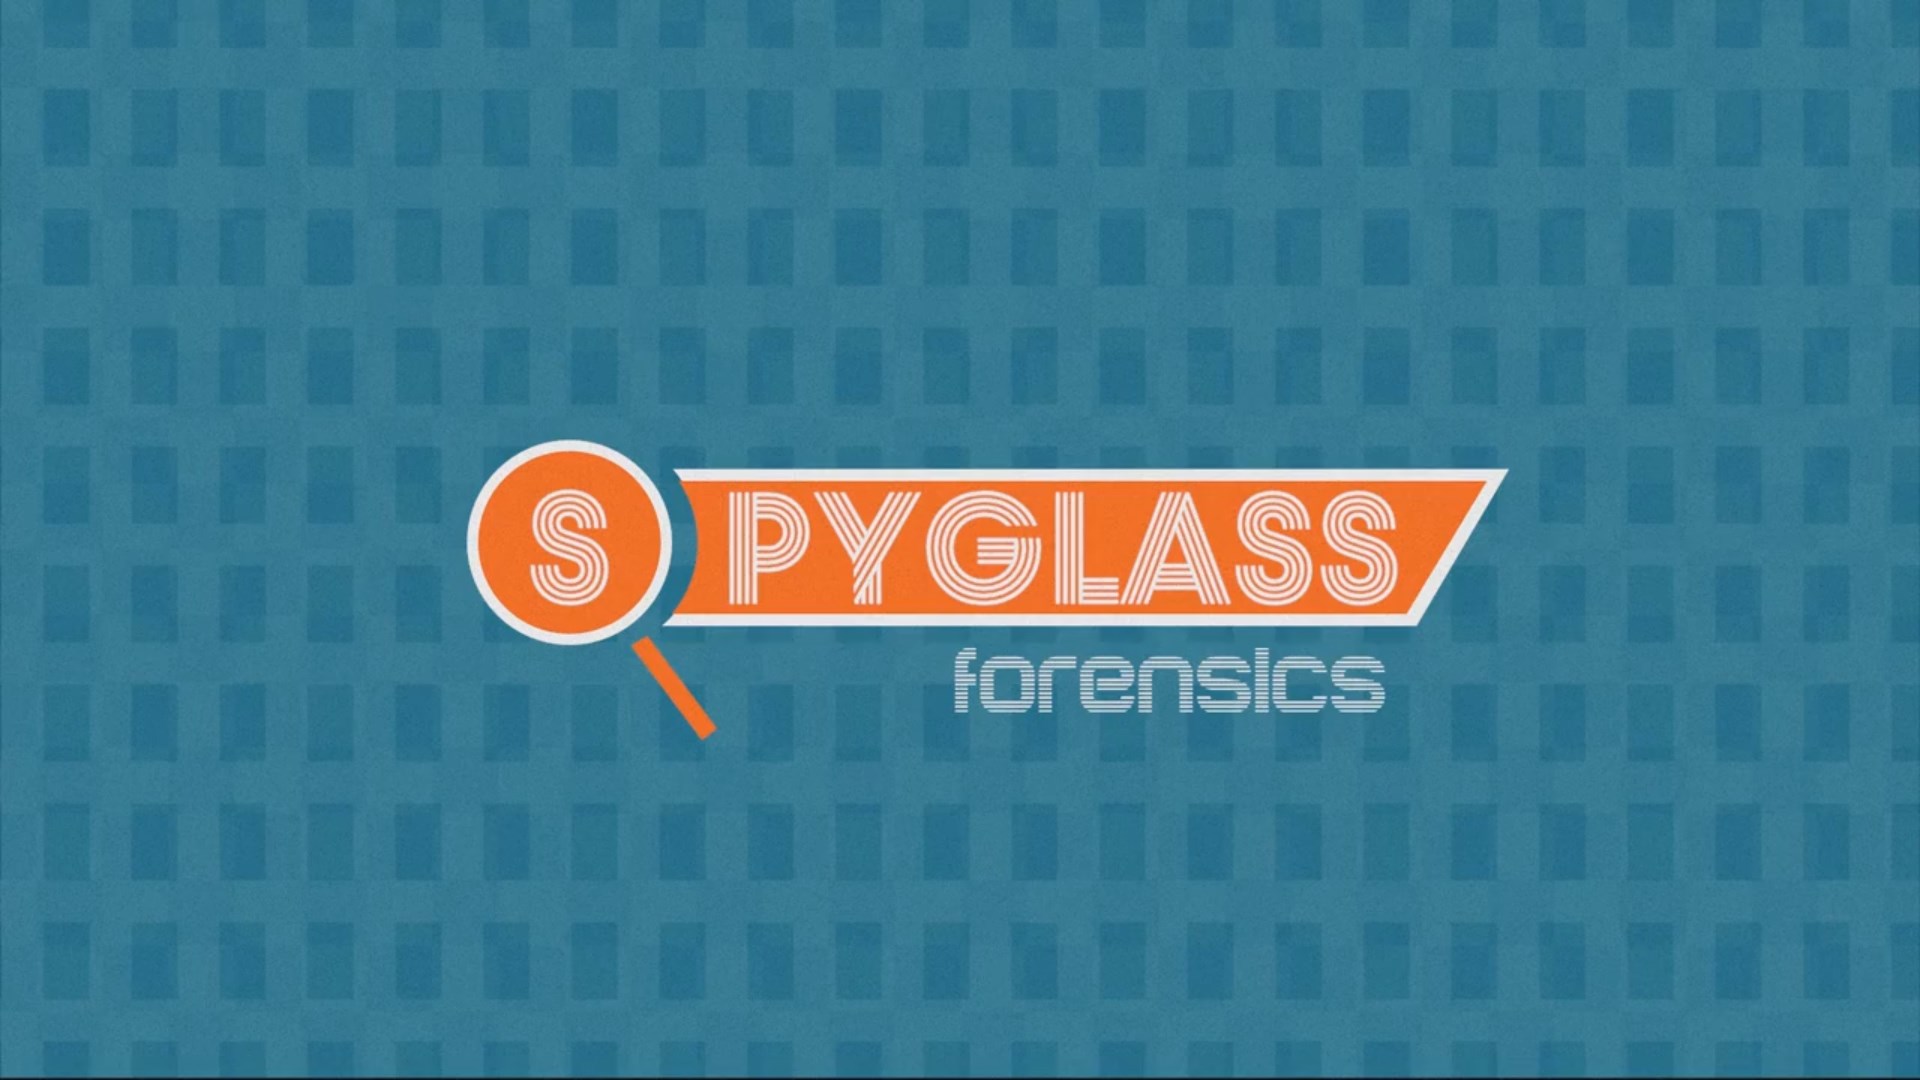 Spyglass Forensics